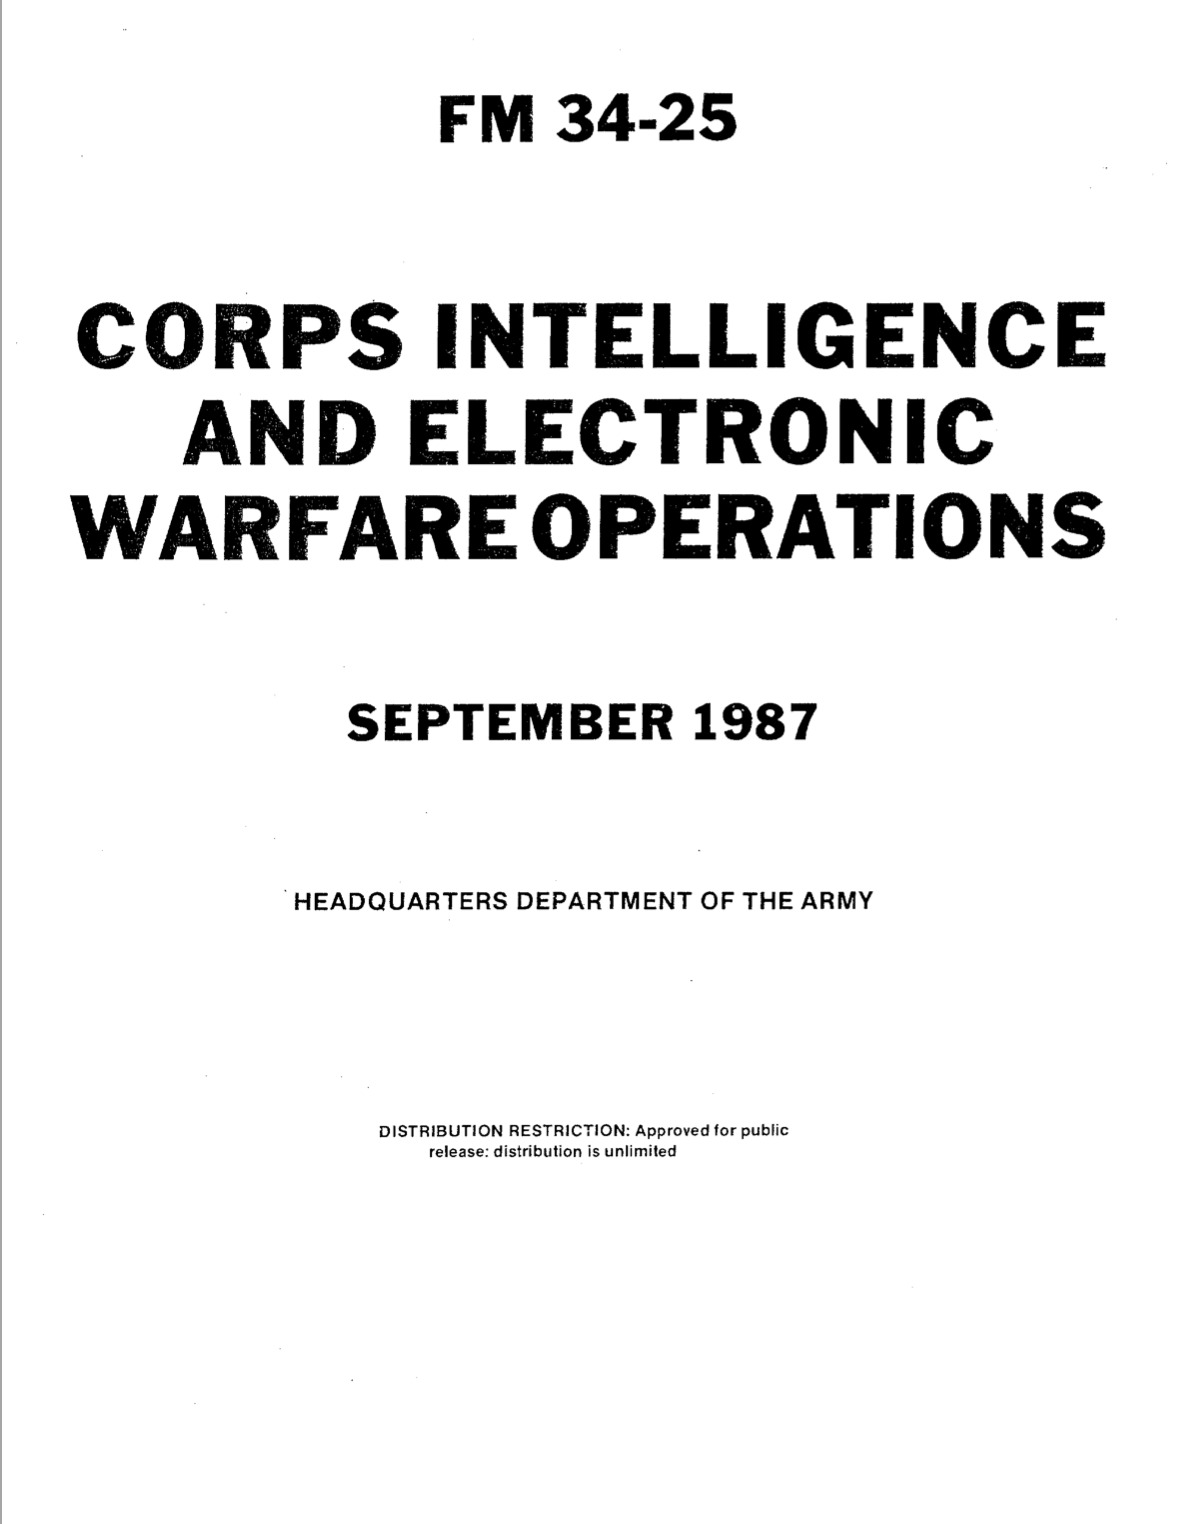 166 page FM 34-25 CORPS Intelligence Electronic Warfare Operations Manual on CD